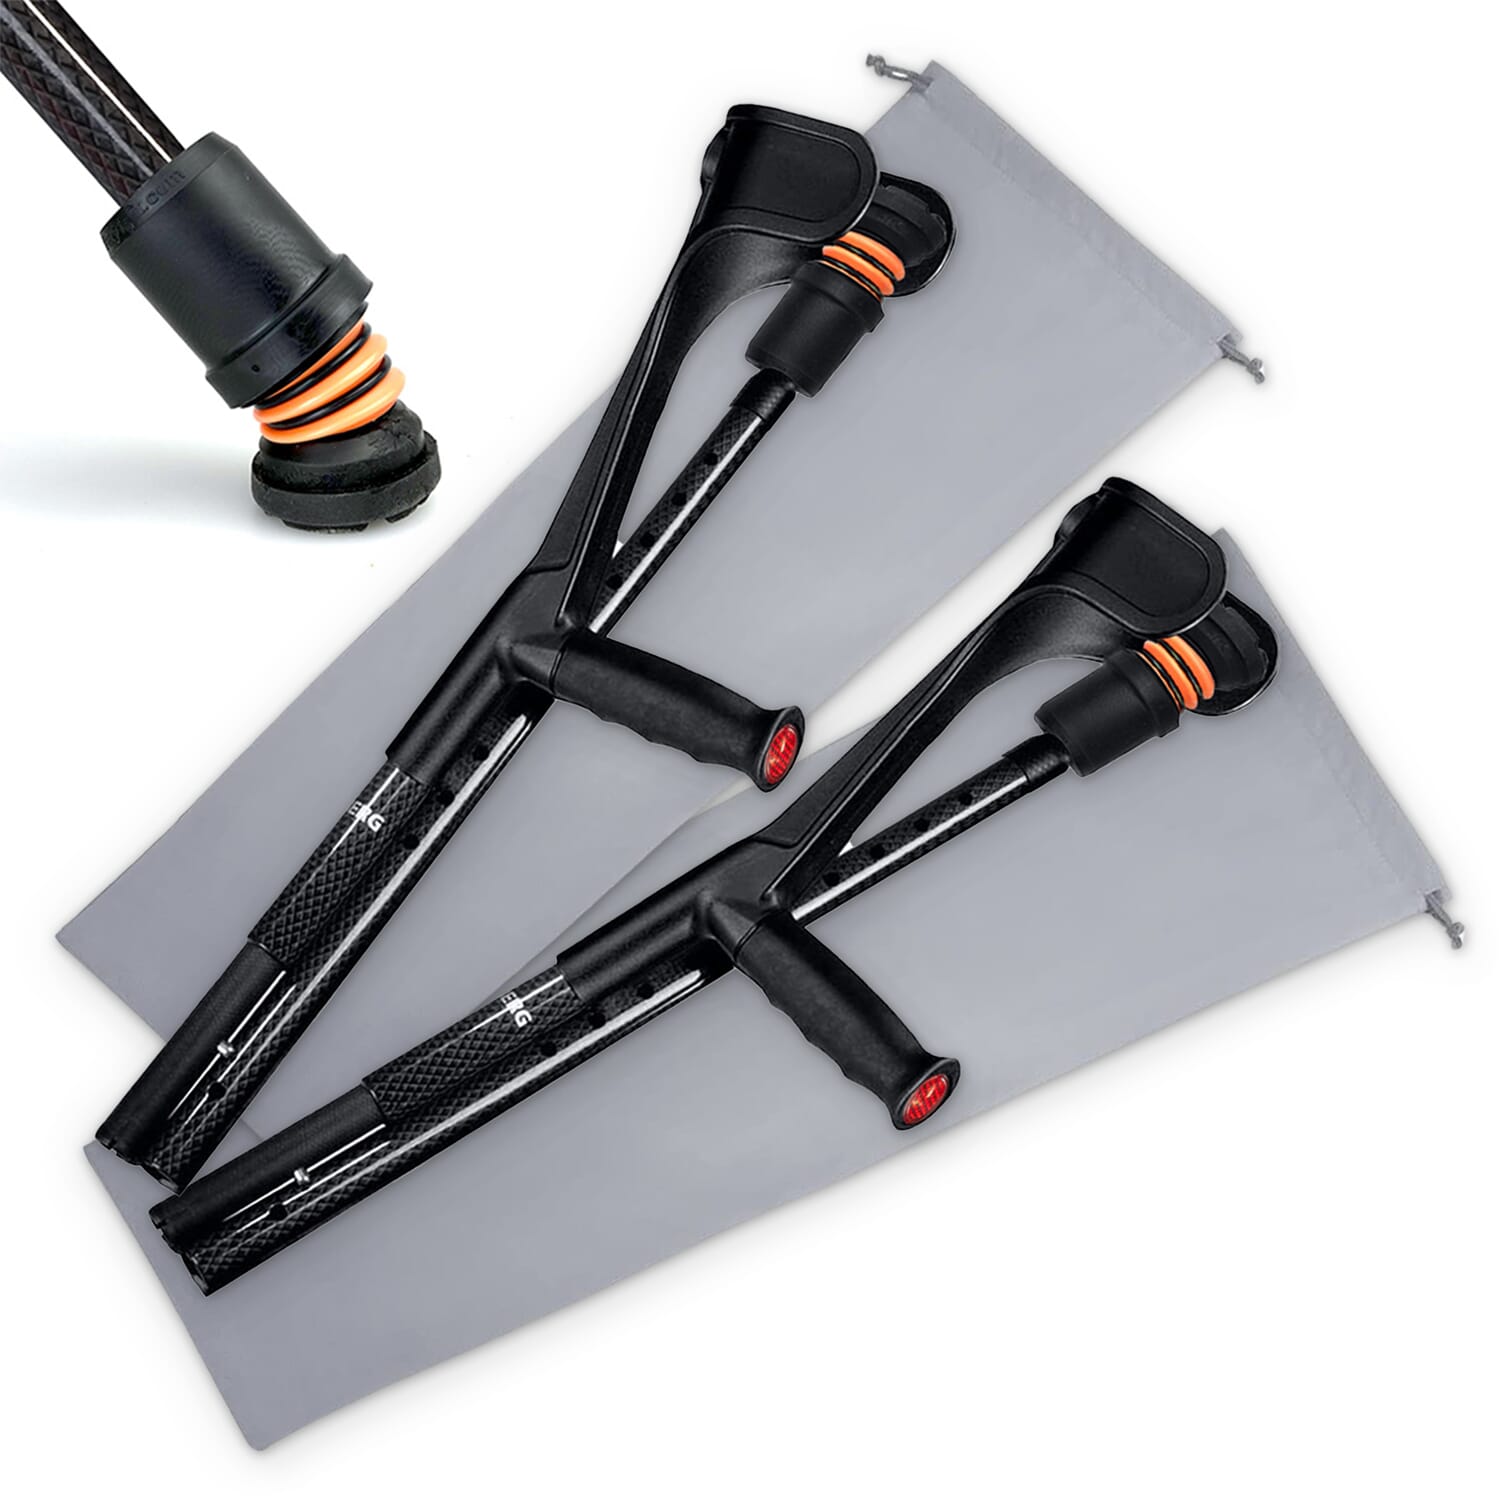 View Flexyfoot Carbon Fibre Folding Crutches Black Pair information